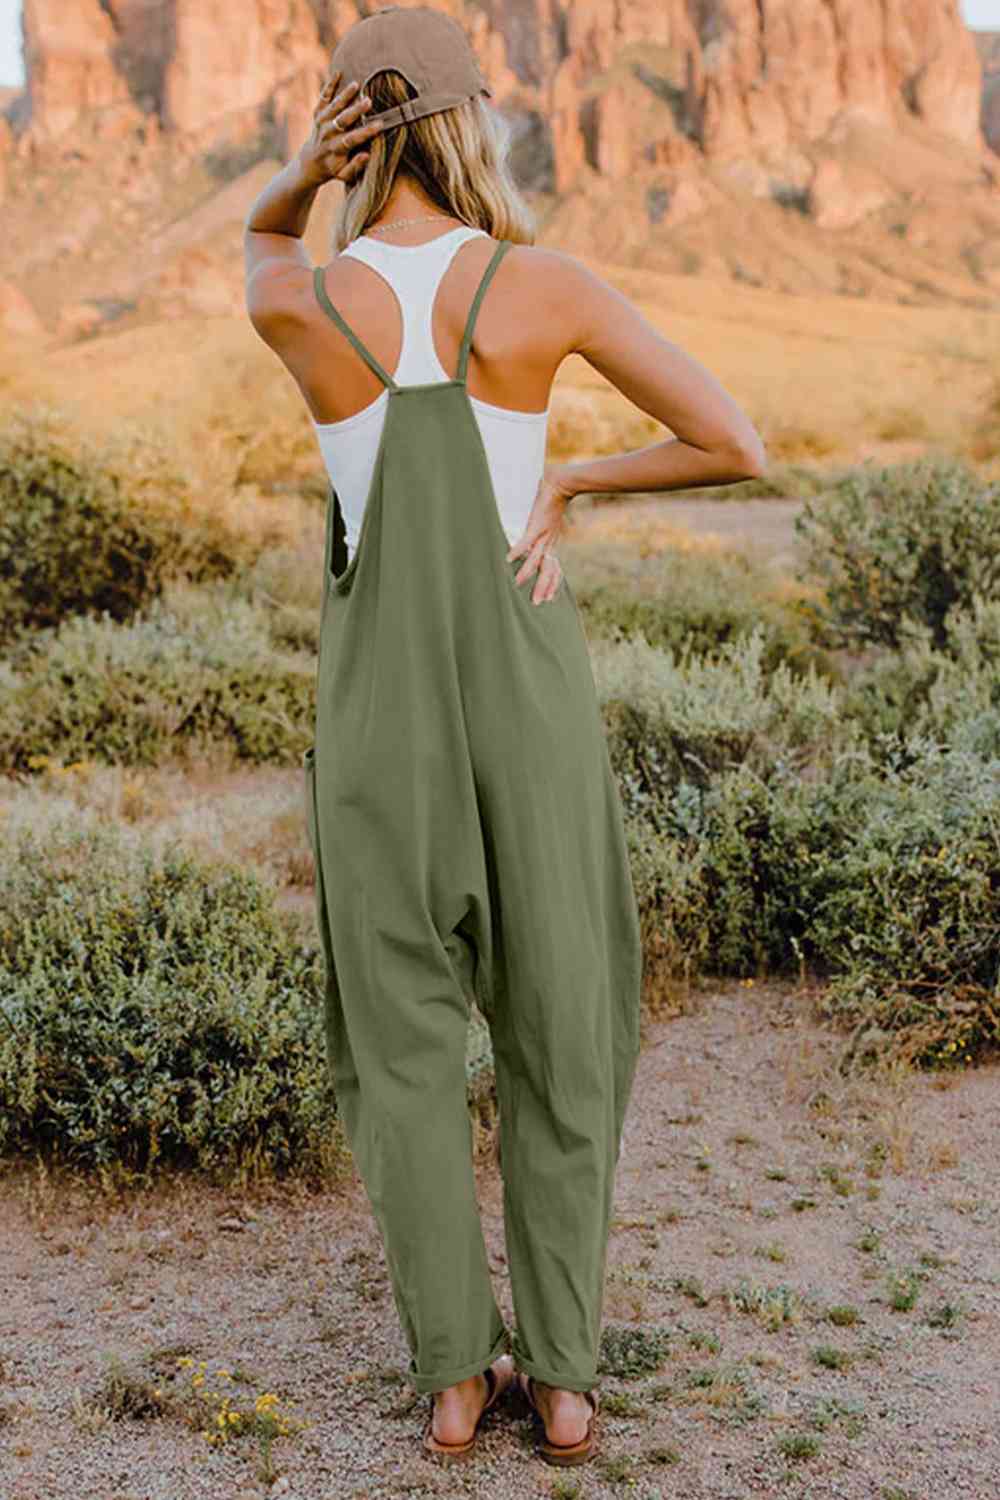 Double Take V-Neck Sleeveless Jumpsuit with Pocket - Dixie Hike & Style